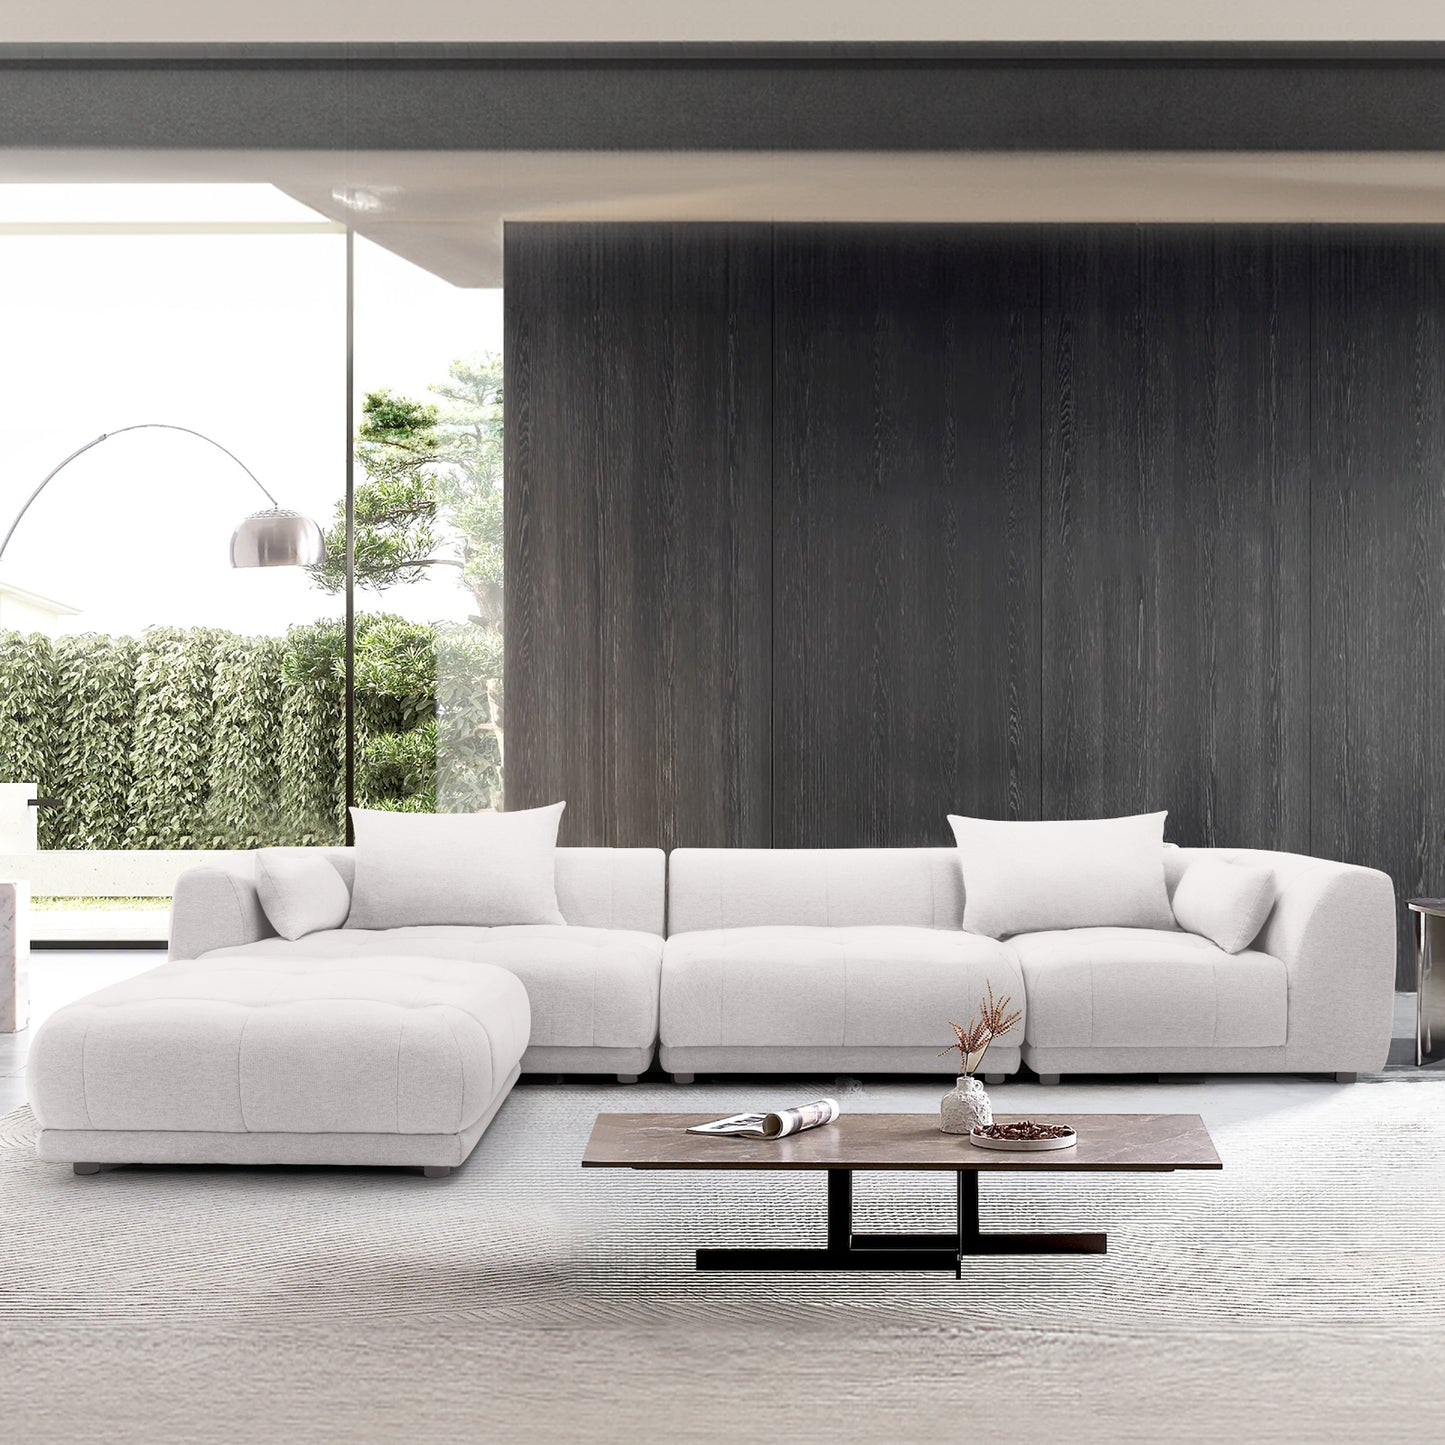 COLAMY 143" Modular Living Room Oversize Fabric Sofa